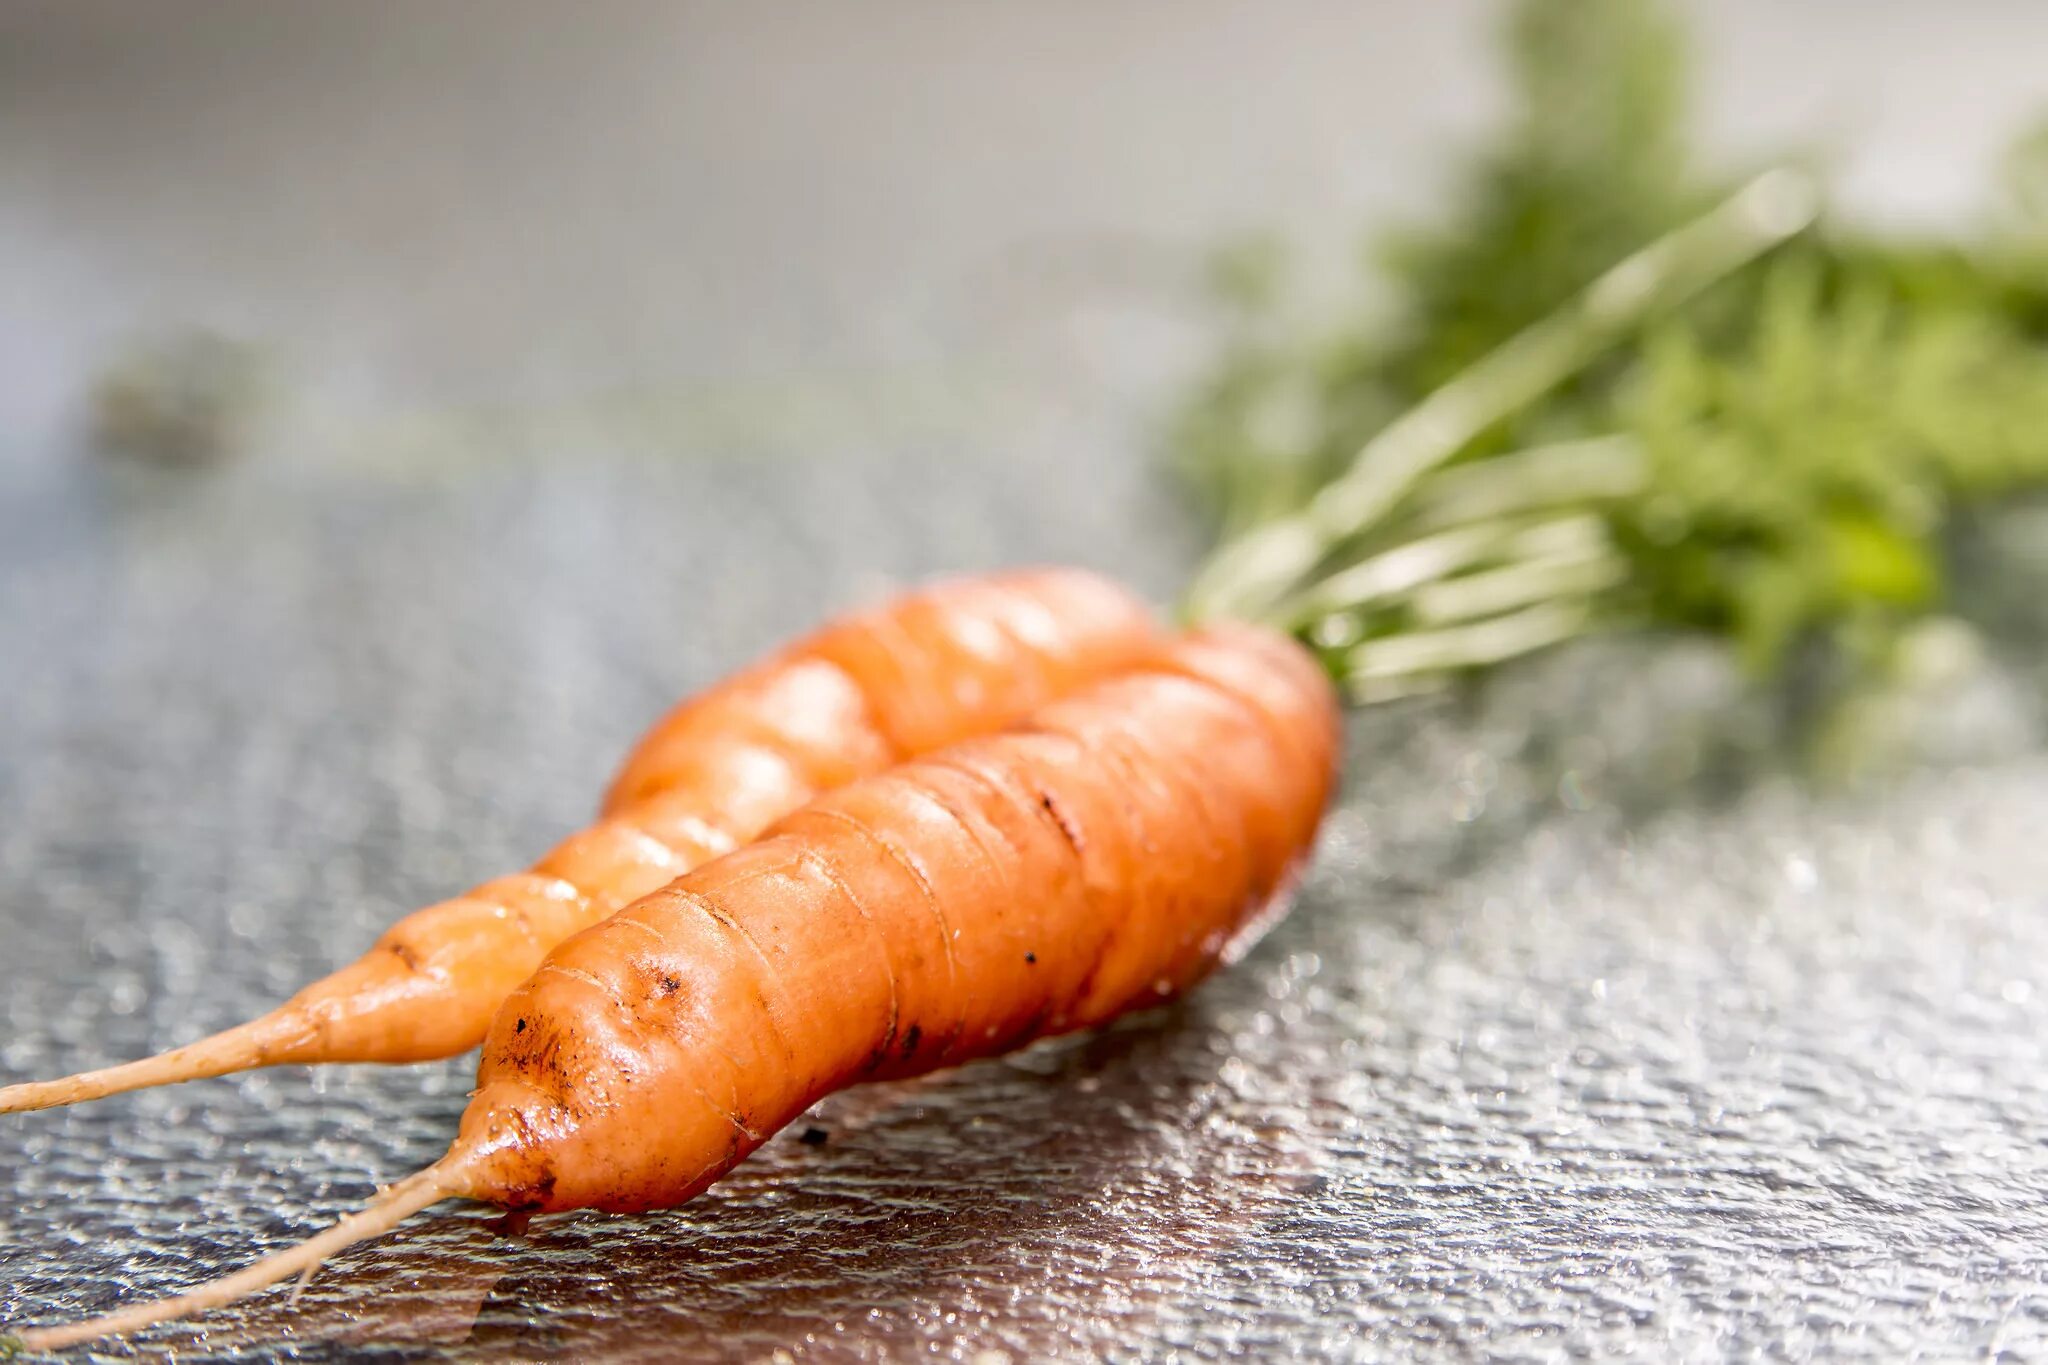 Carrot vegetable. Морковь. Овощи морковь. Морковка фото. Оранжевая морковь.